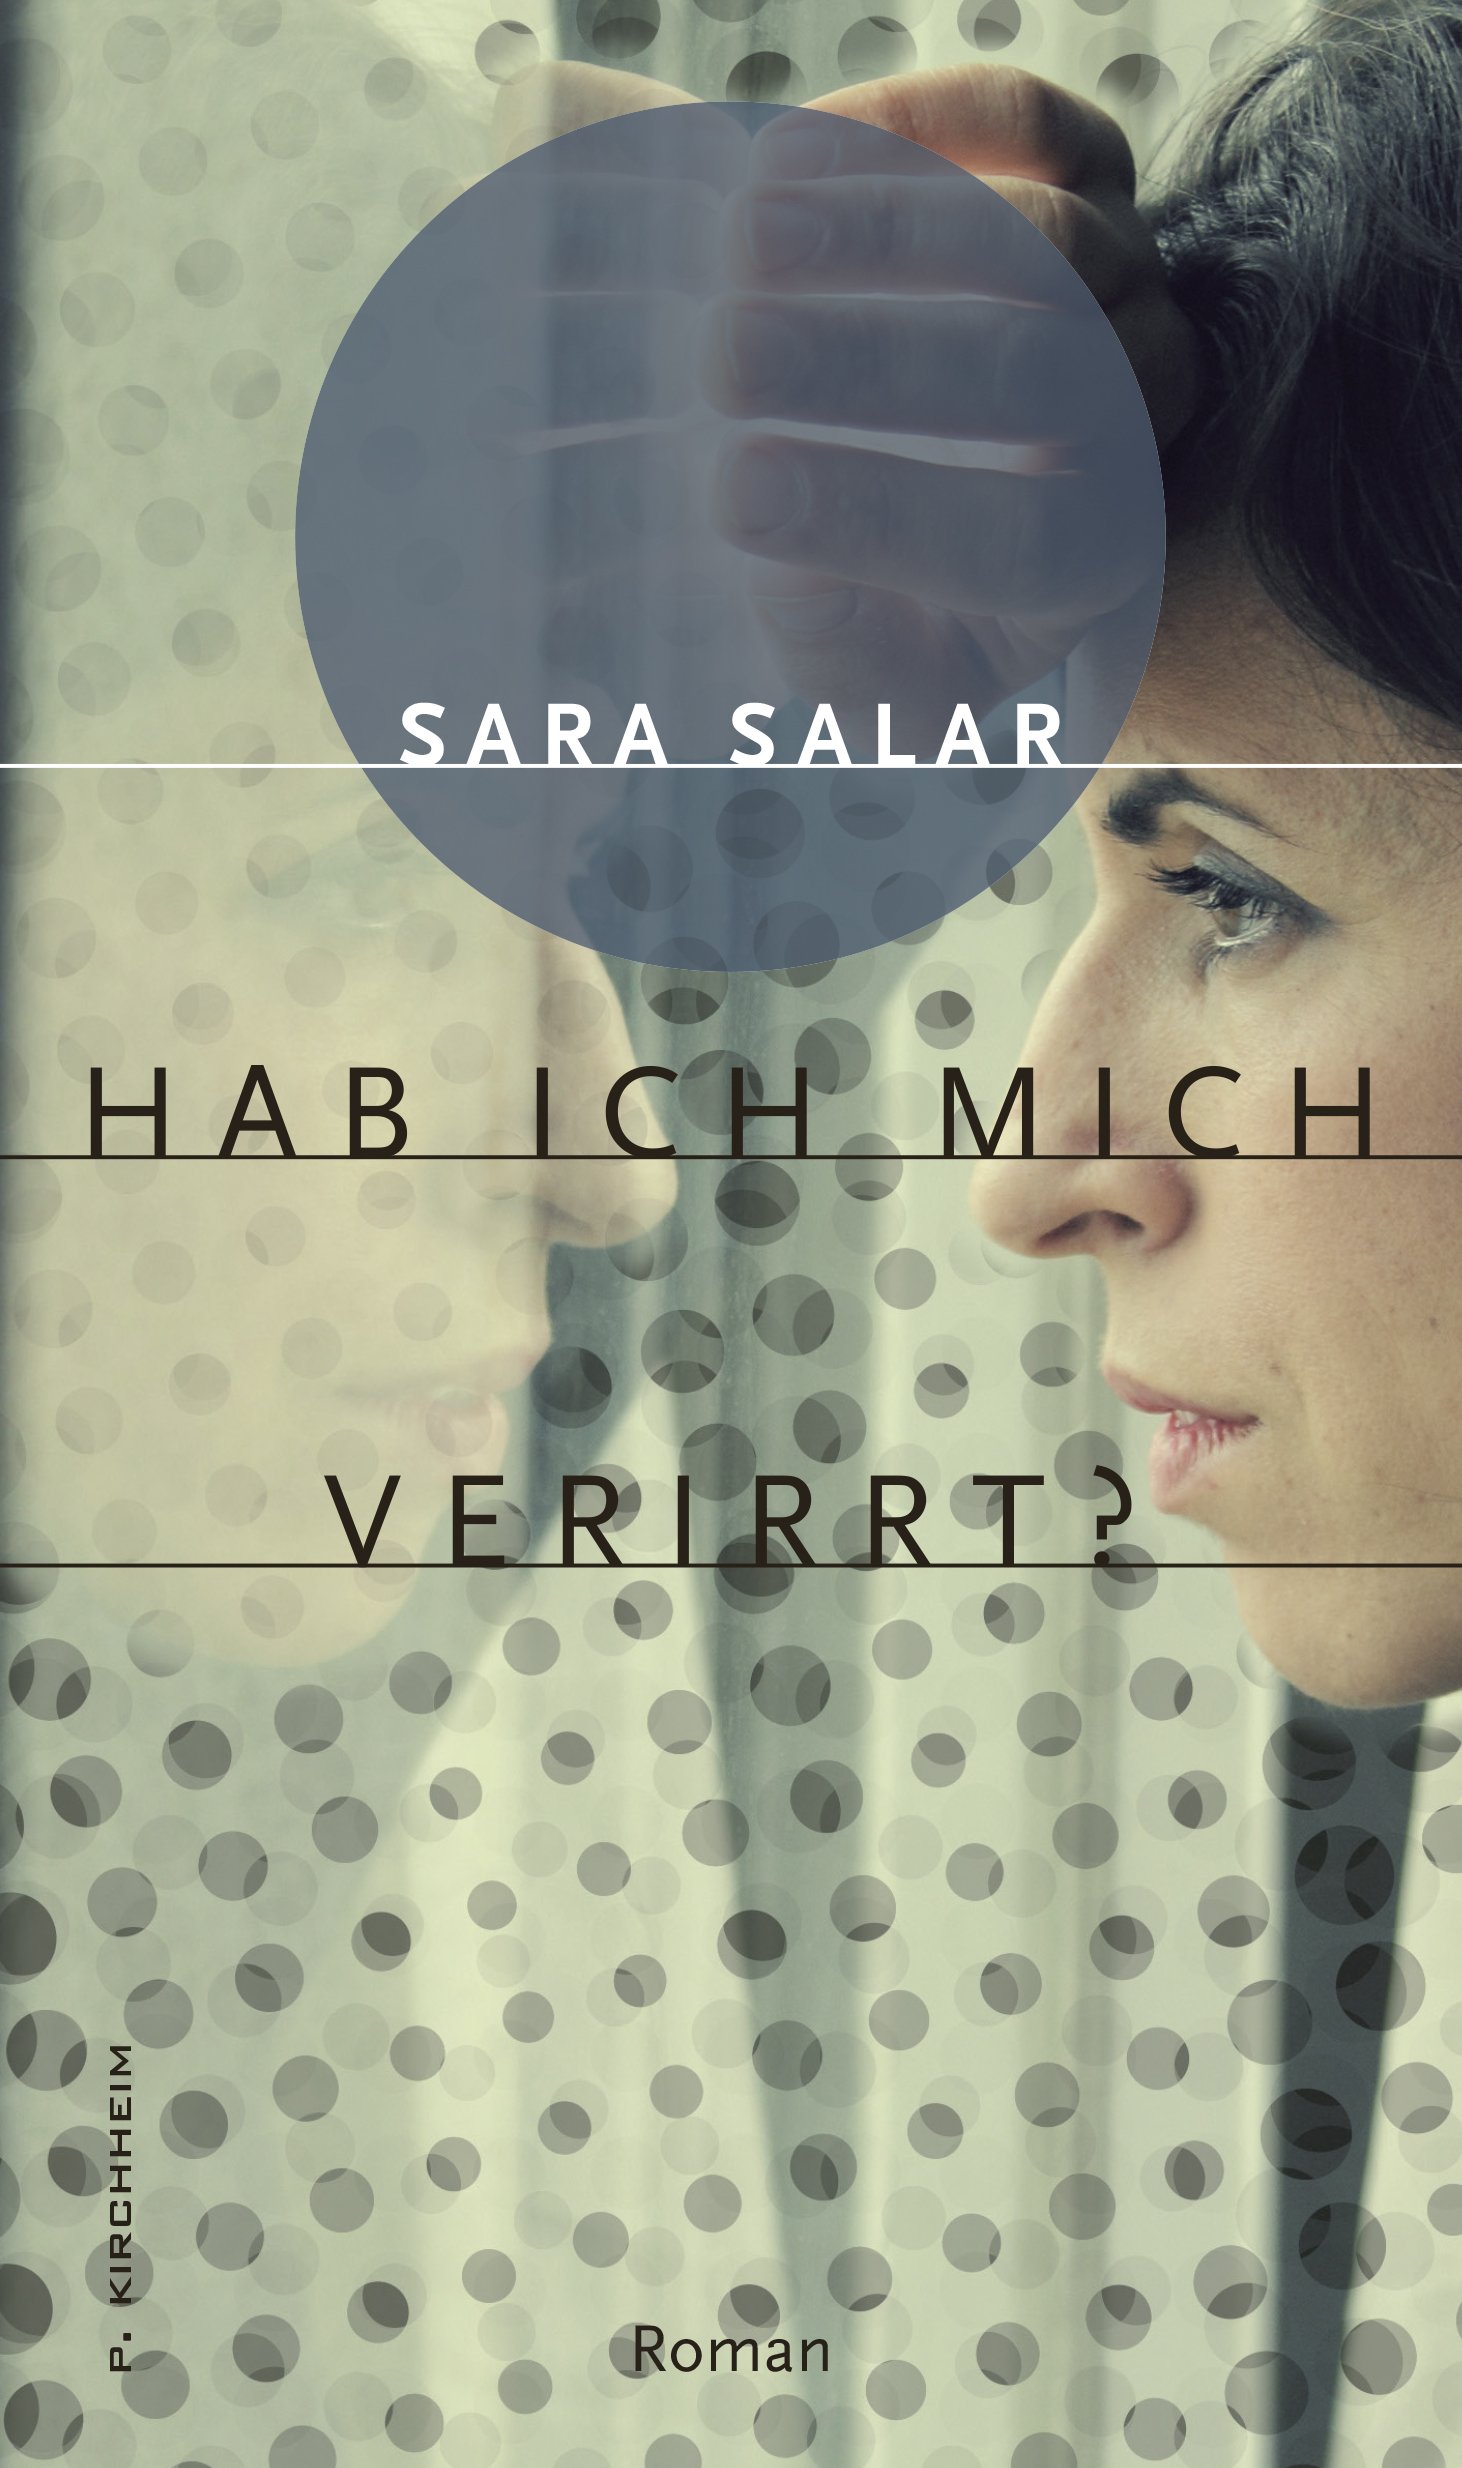 Buchcover Sara Salar "Hab ich mich verirrt?" im Verlag P. Kirchheim